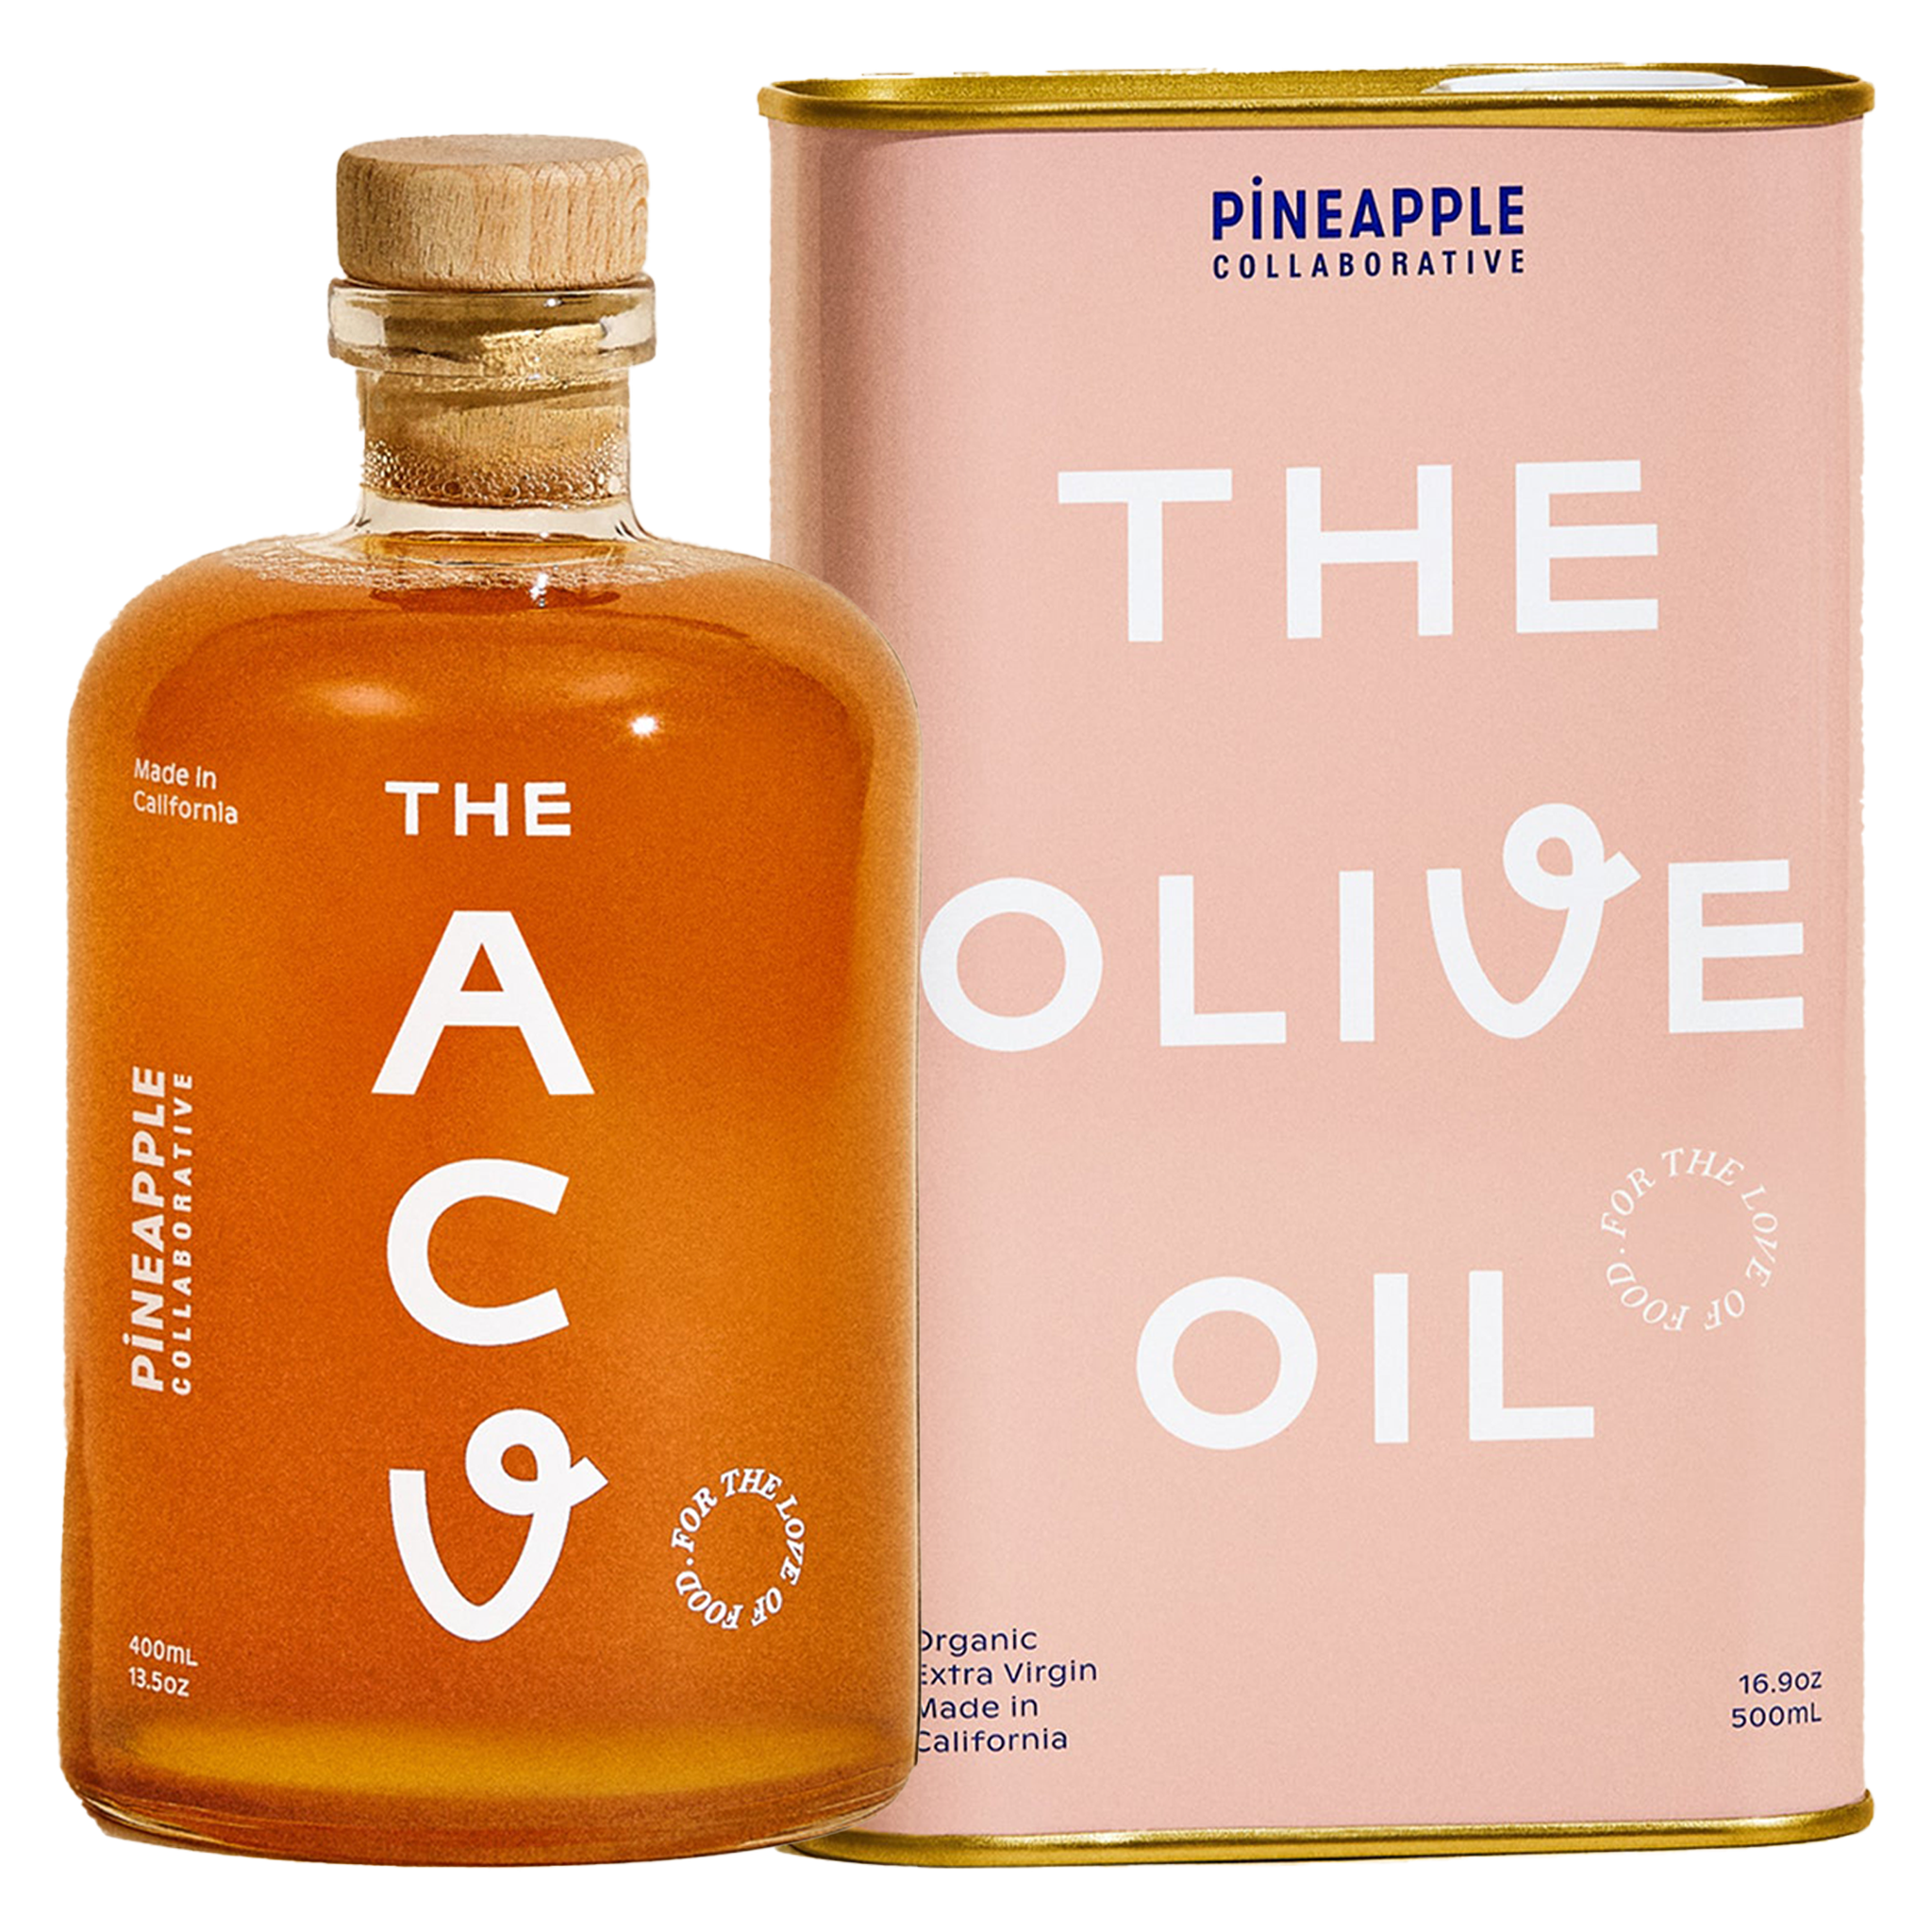 The Olive Oil and Vinegar Set